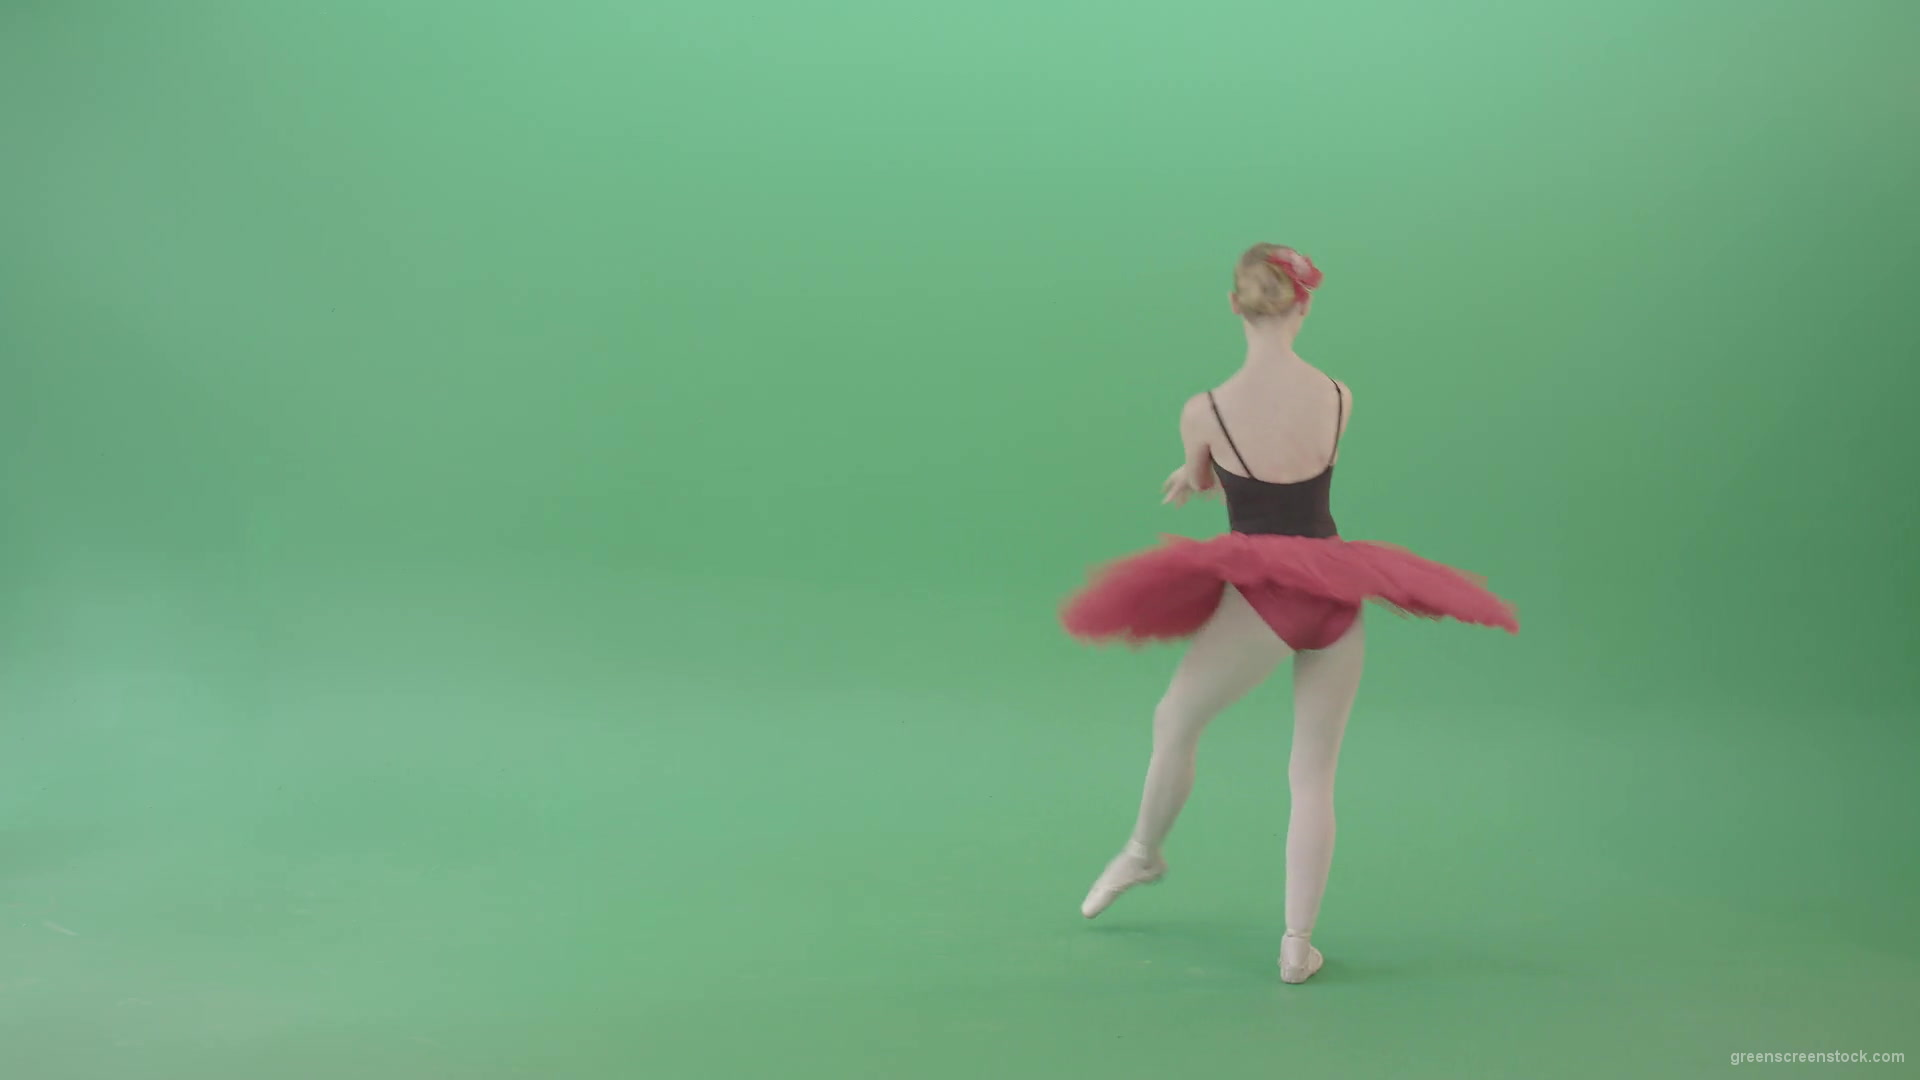 Classical-Ballerina-girl-dancing-red-black-ballet-on-green-screen-4K-Video-Footage-1920_004 Green Screen Stock